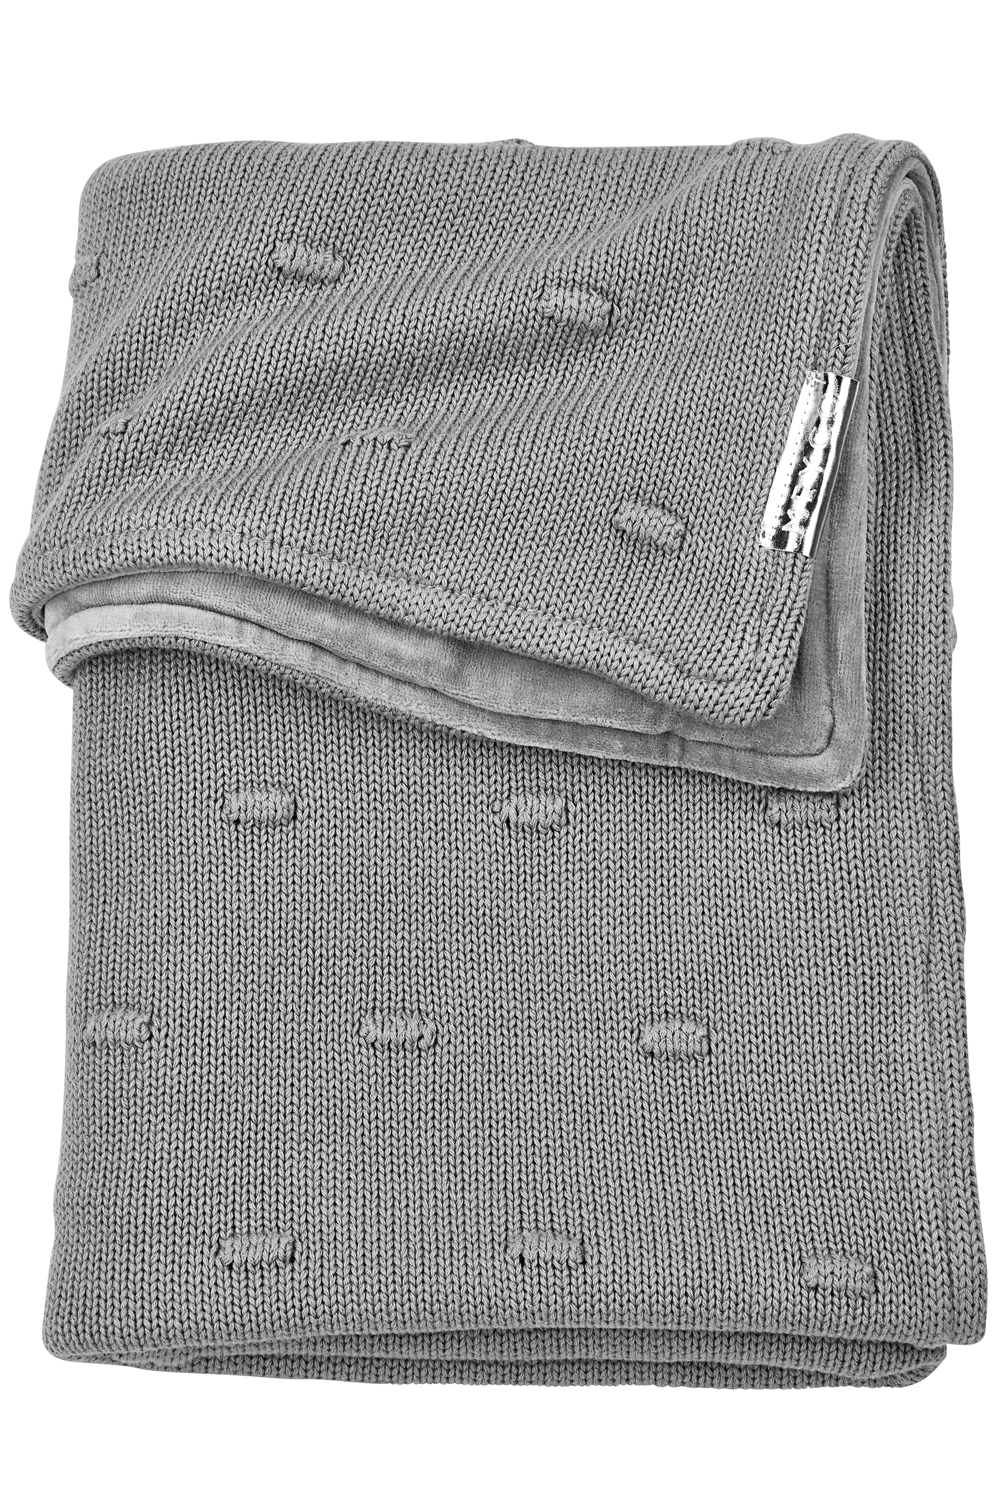 Cot bed blanket Knots velvet - grey - 100x150cm